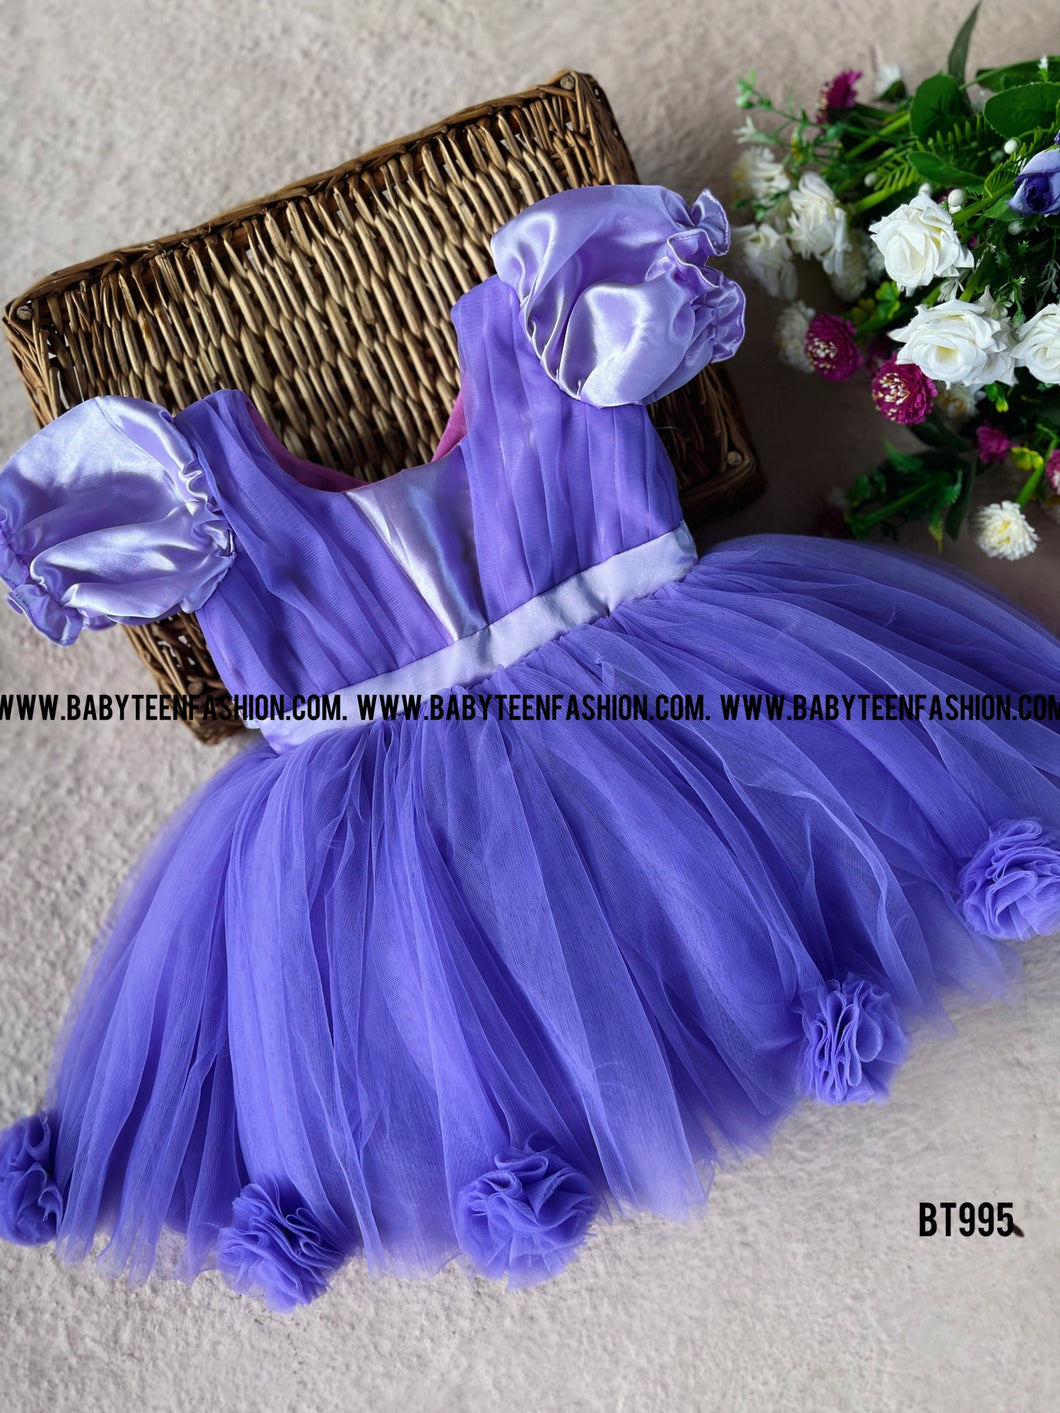 BT995 Lavender Dream Dress – Your Little One's Fantasy Frock